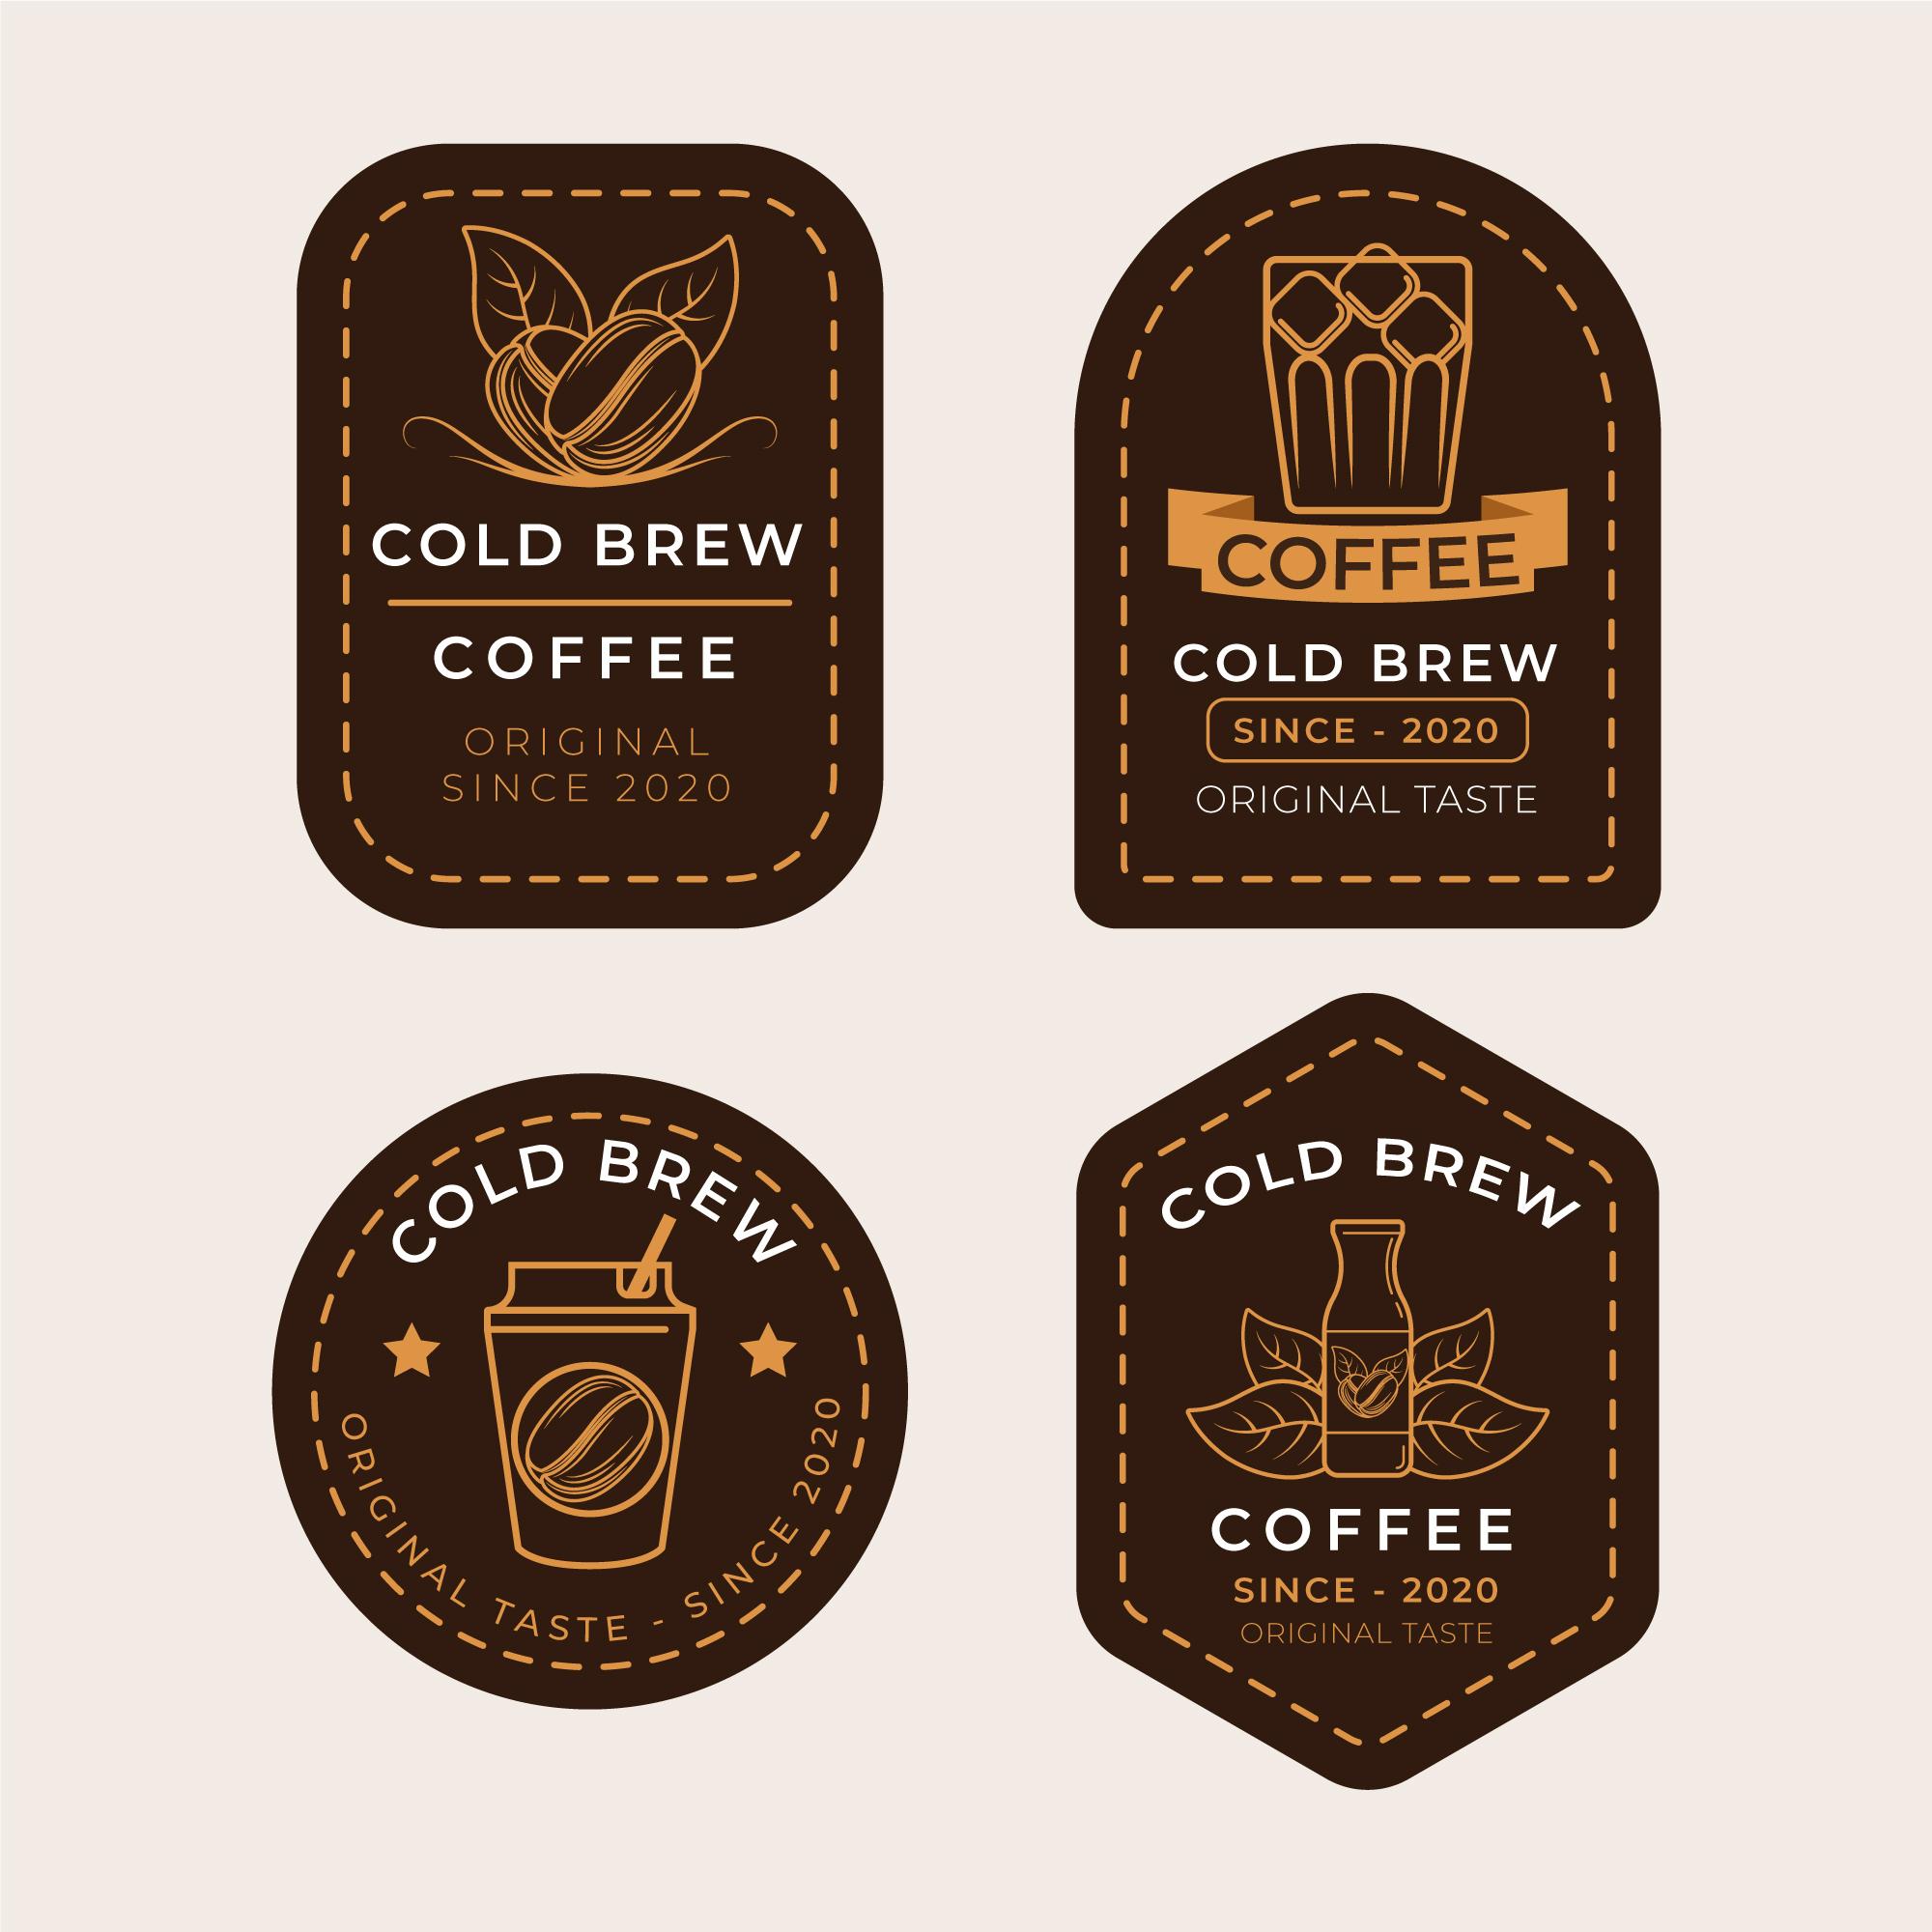 Download mẫu logo cafe cho quán, bao bì cafe